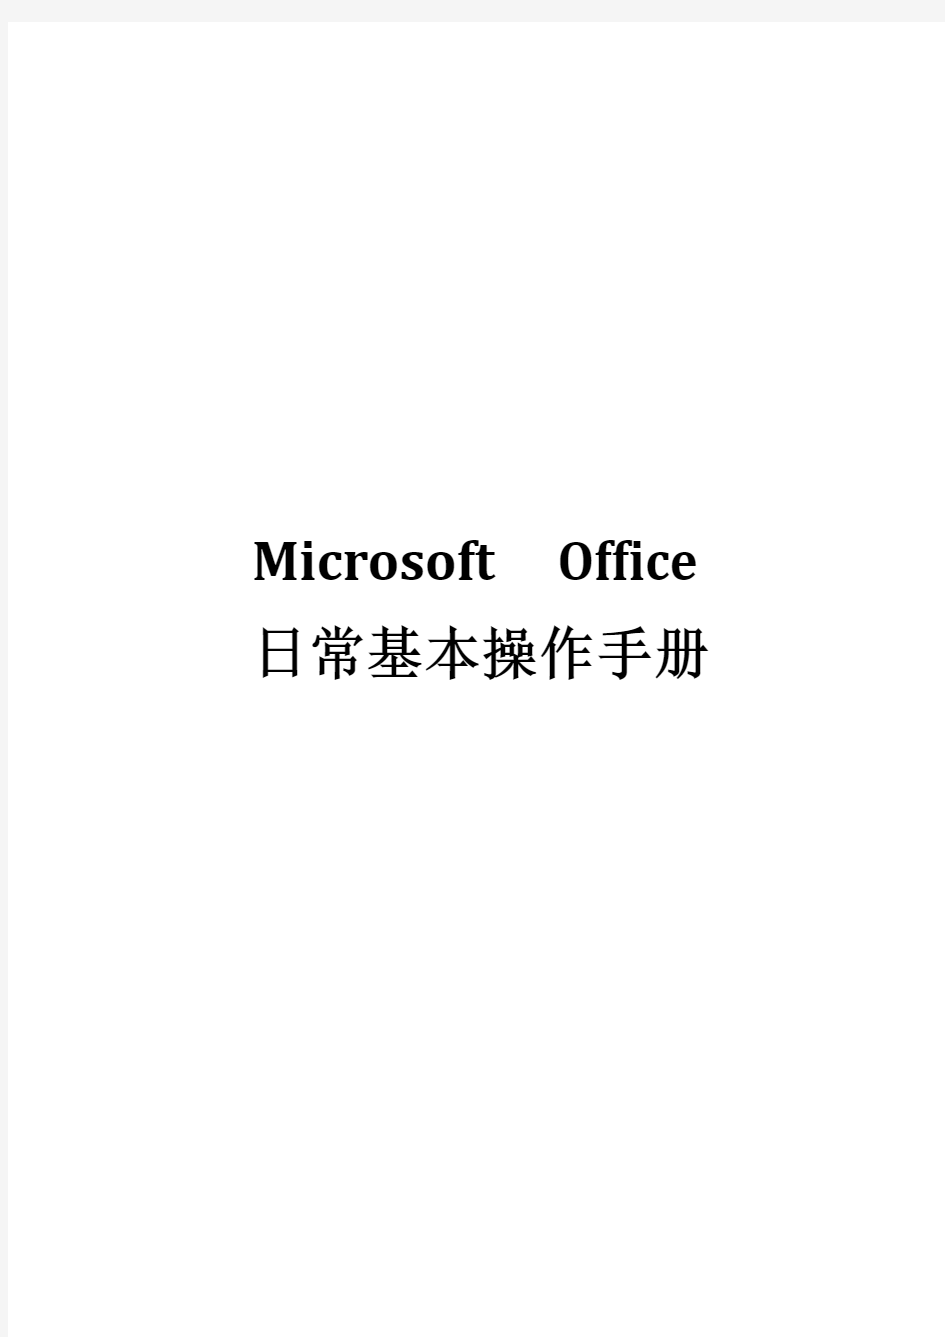 MicrosoftOffice日常基本操作手册